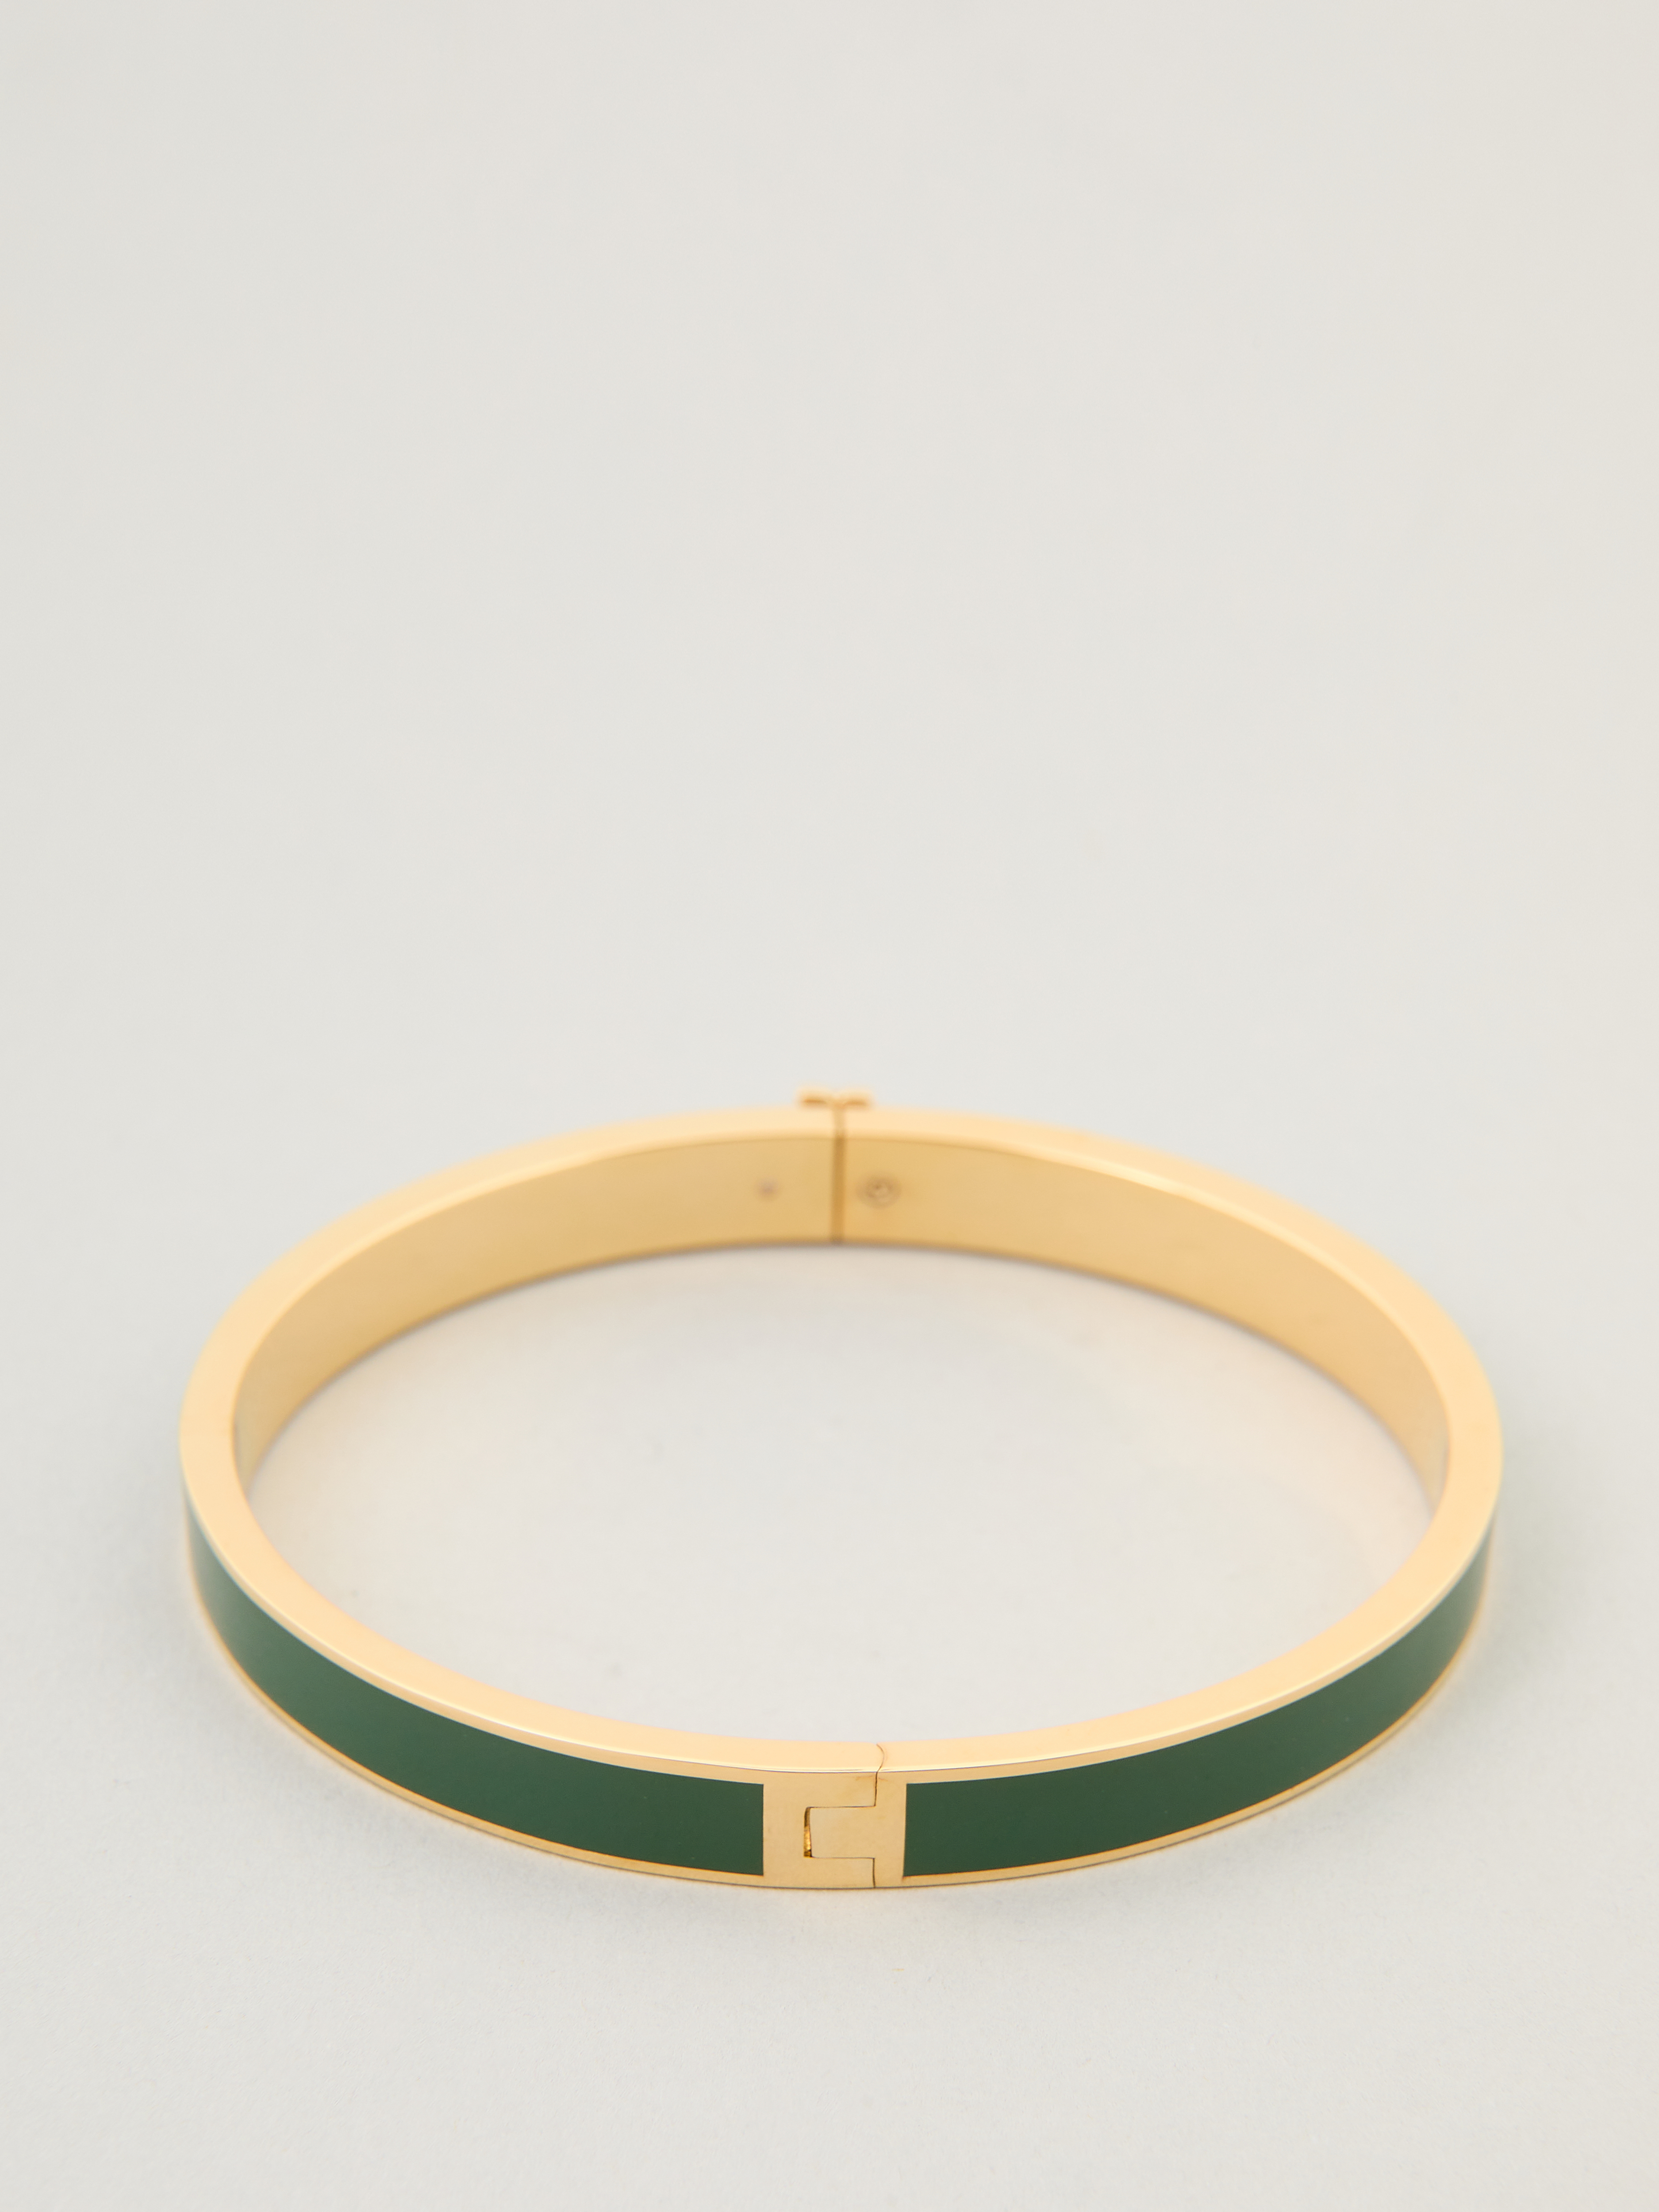 Tory Burch Bracelet 'Kira' Green | Bangles & Bracelets